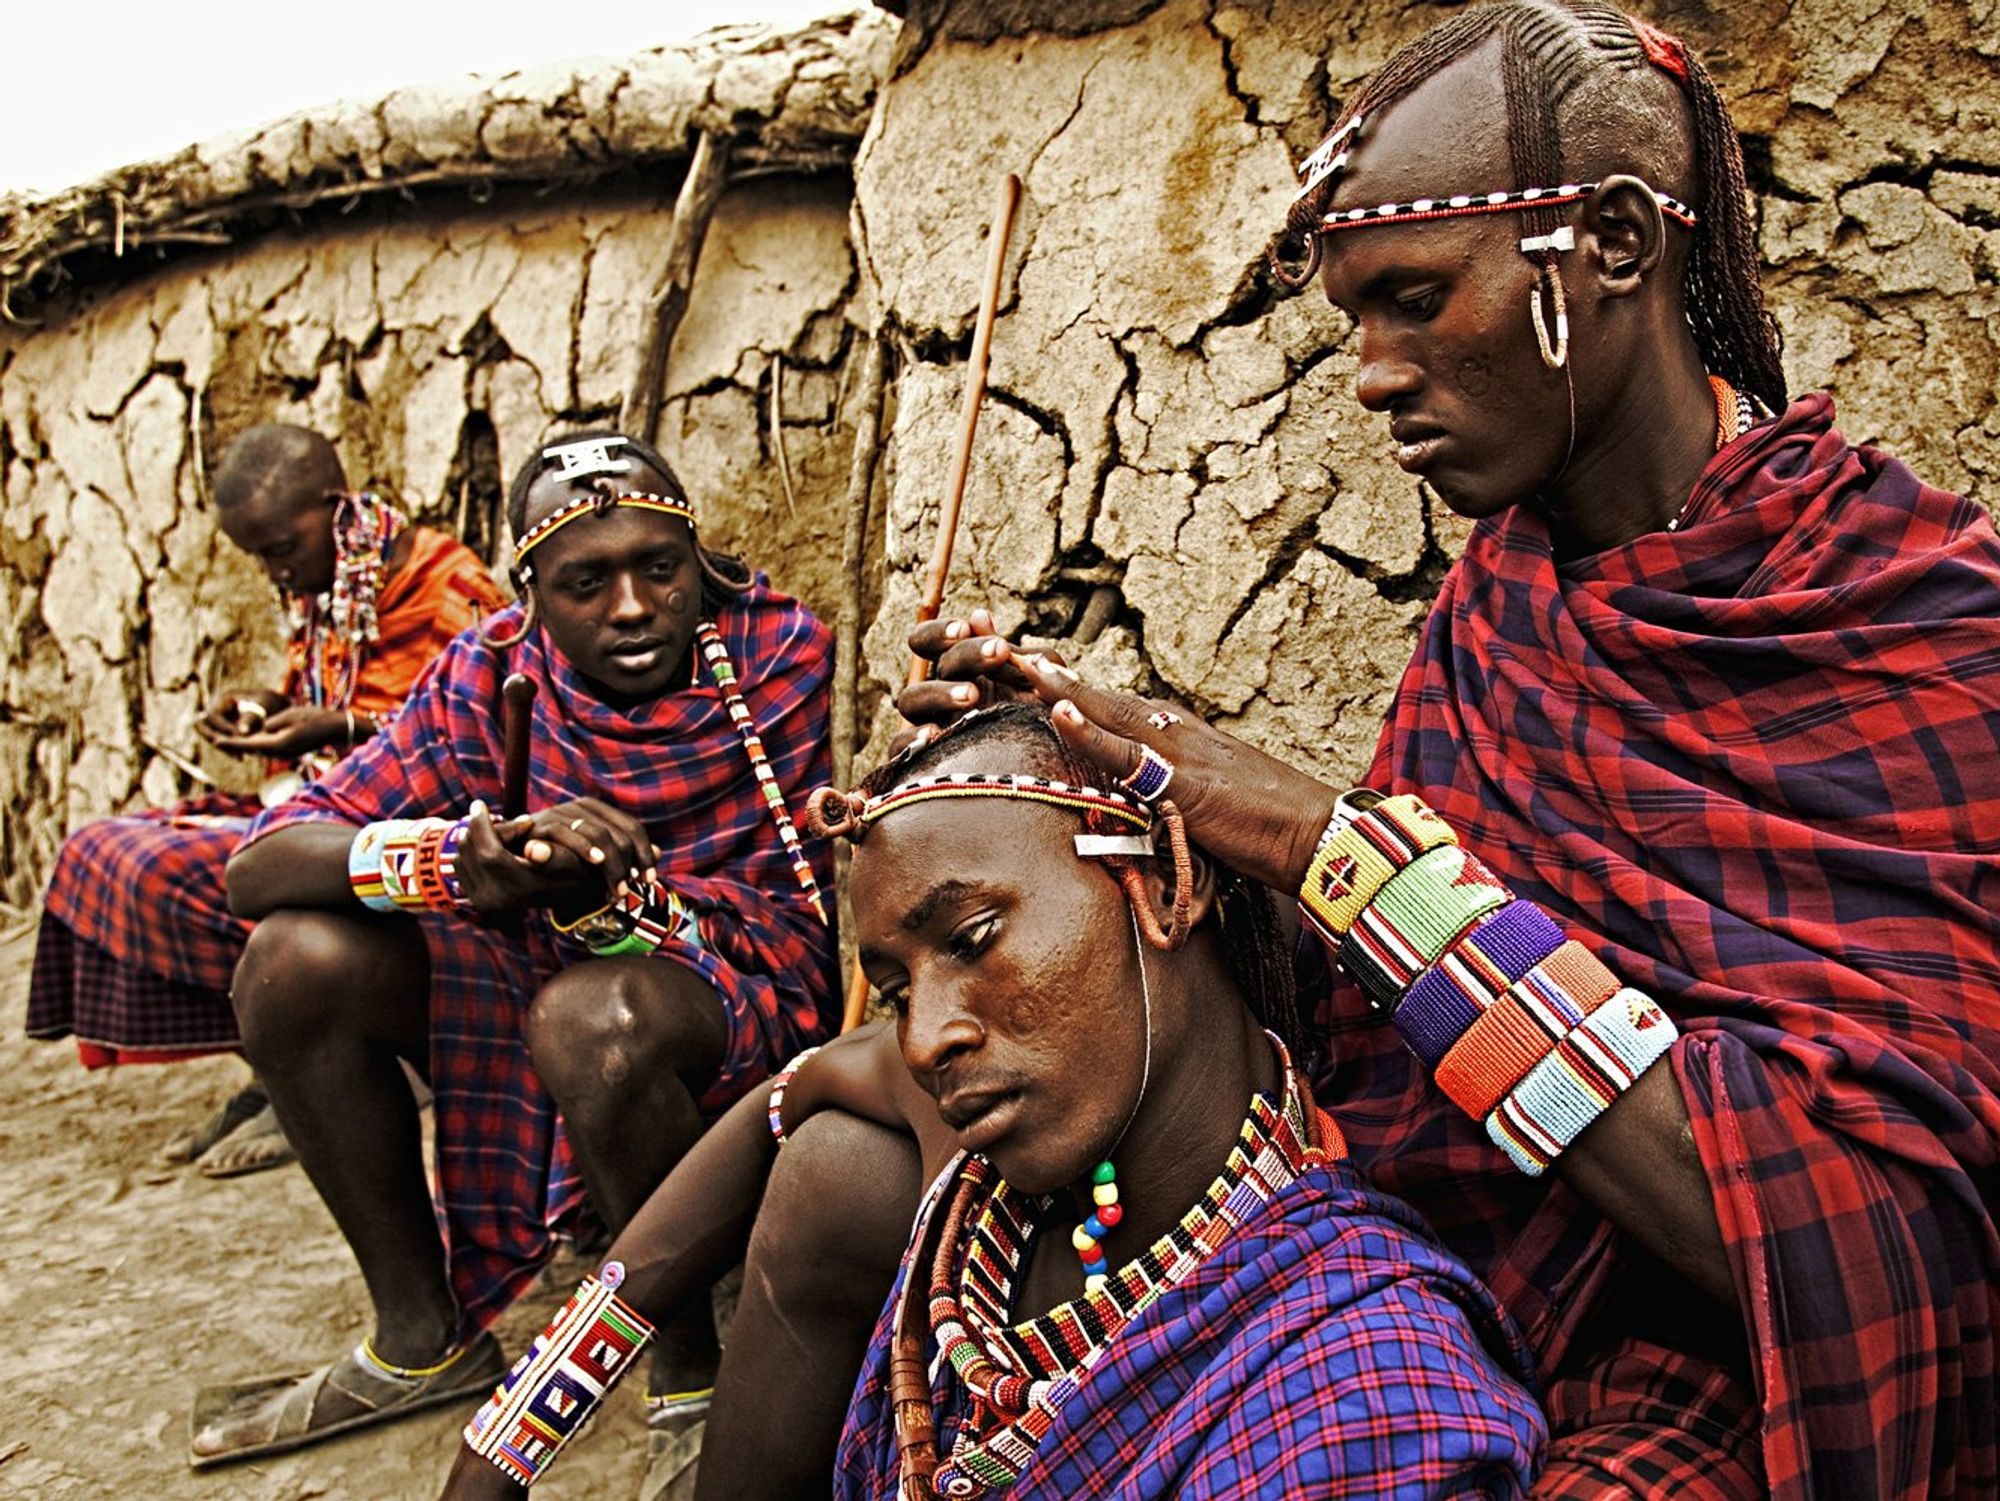 Maasai people. Men spend hours braiding each othersí long ochred colored hair. Near Amboseli National Park, Kenya